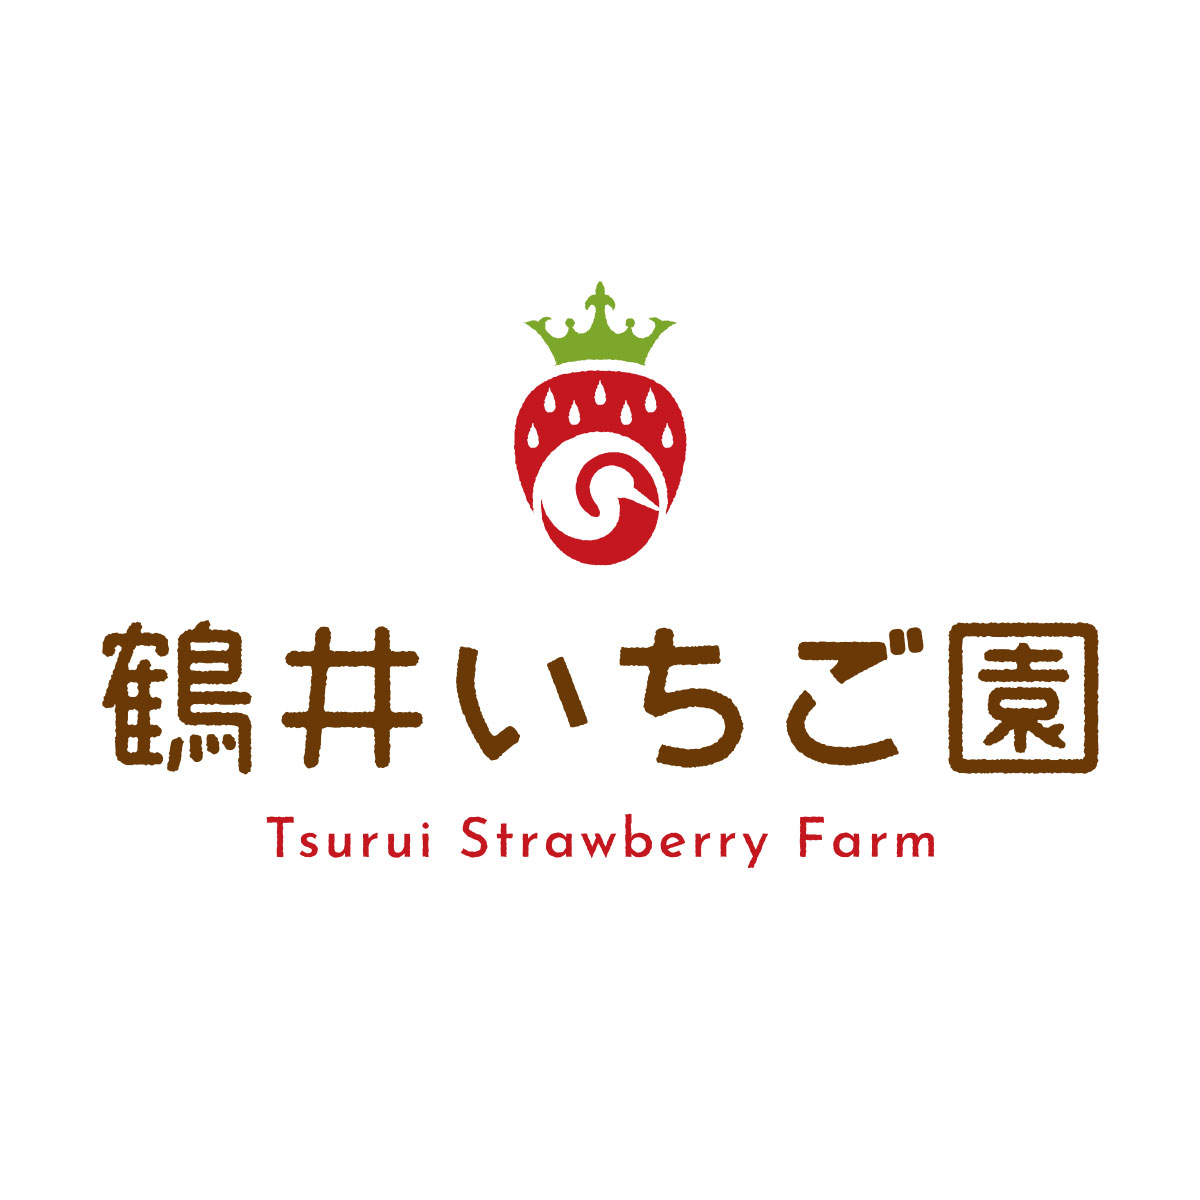 https://crieinc.co.jp/wp-content/uploads/2021/11/tsuruiichigo_logo_002-1.jpg